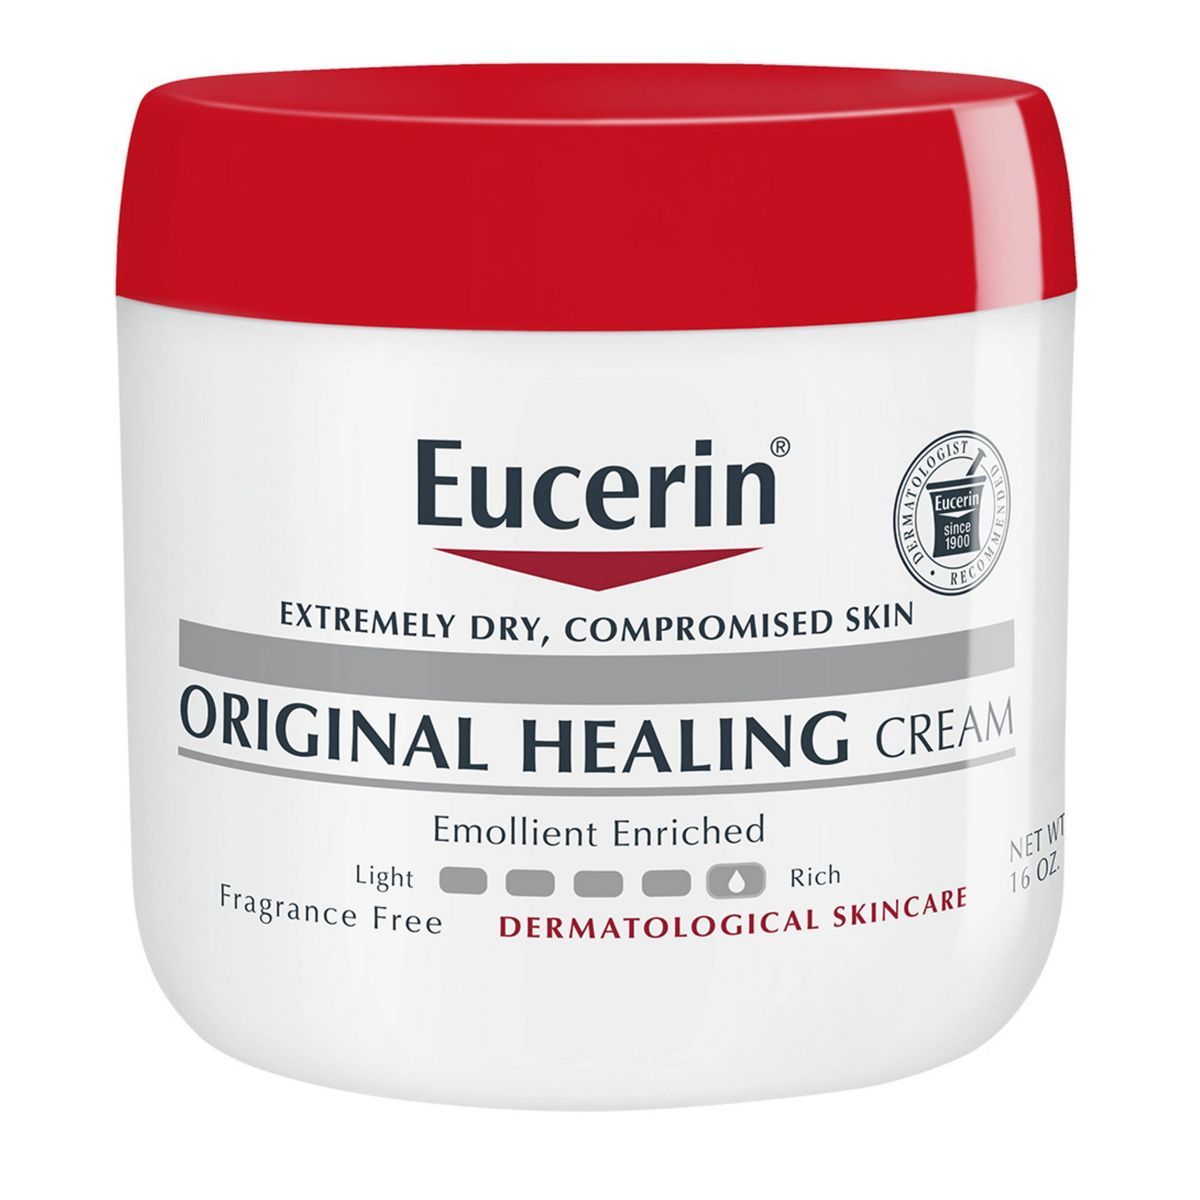 Eucerin Original Healing Cream Fragrance Free Body Cream for Dry Skin Unscented - 16oz | Target